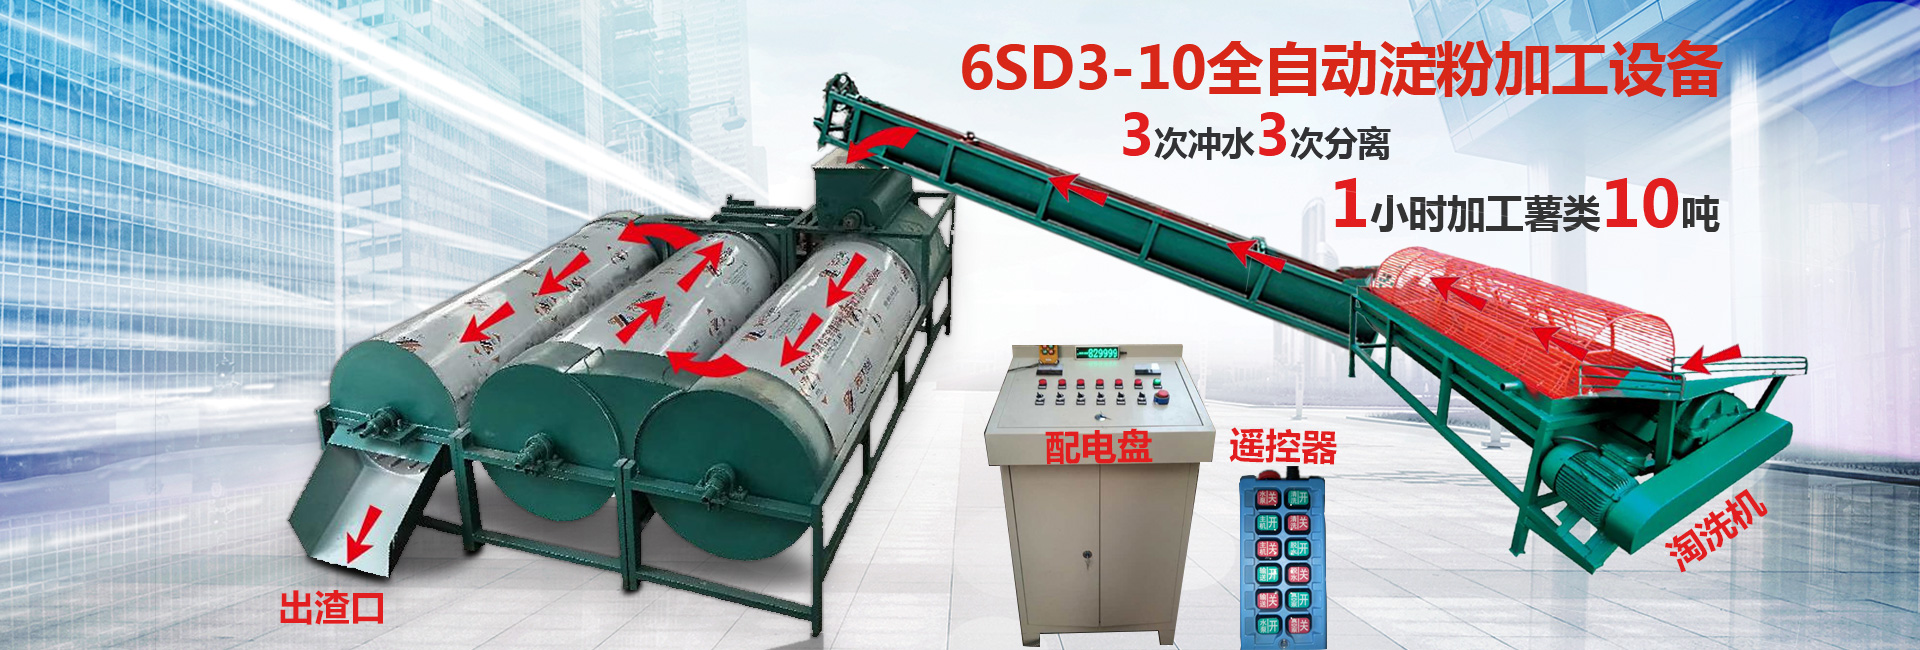 6SD3-10全自動淀粉加工設備